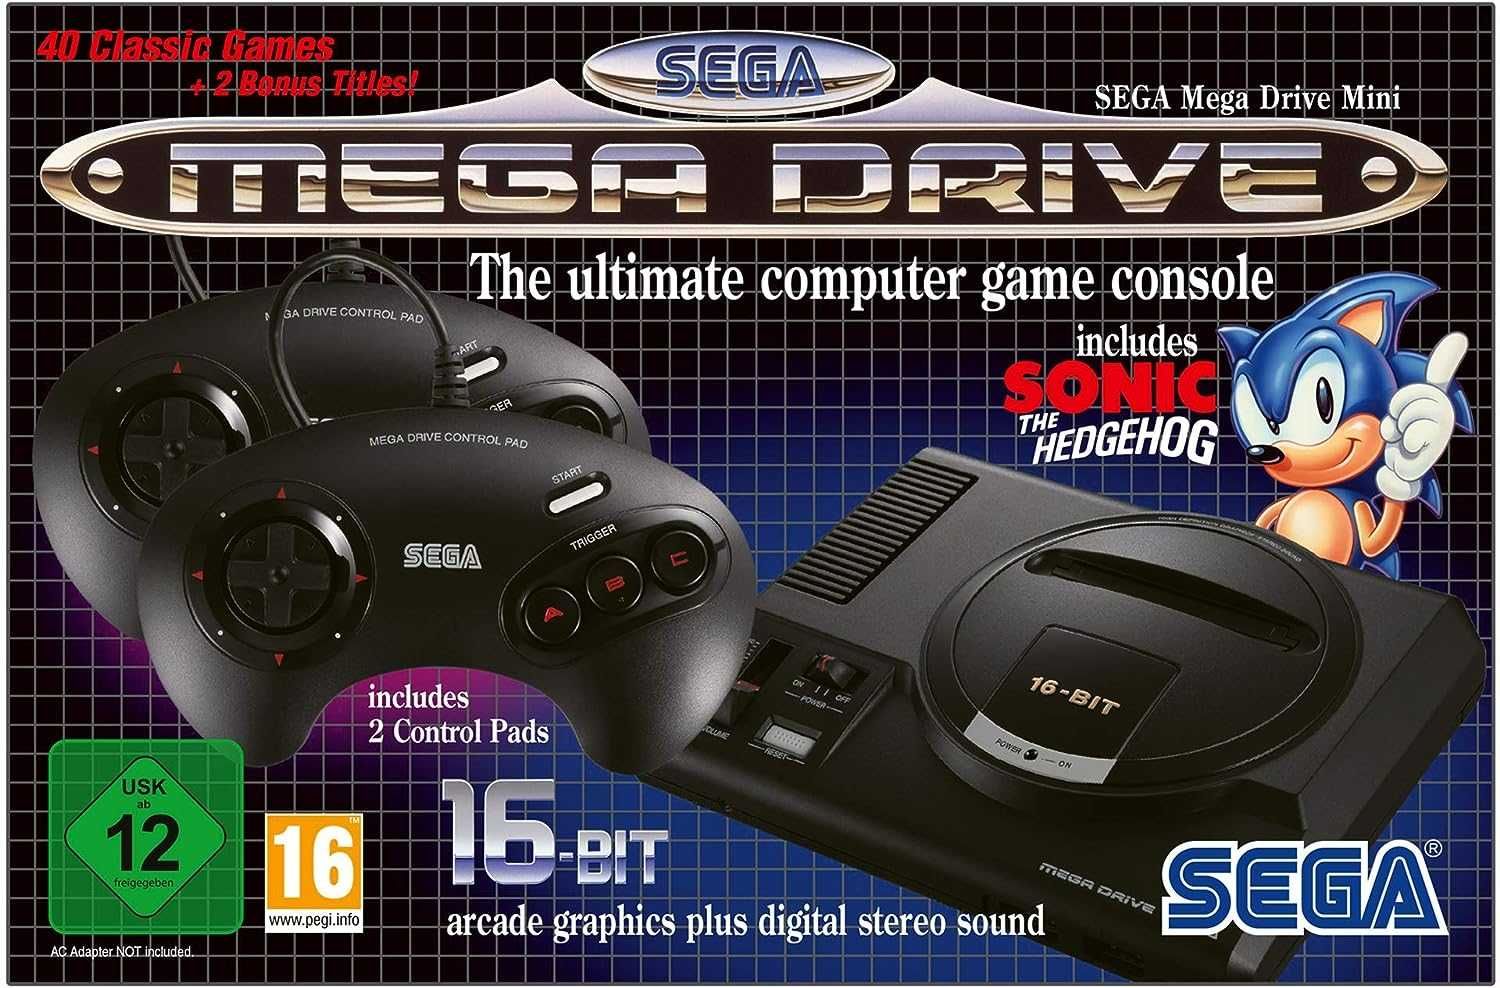 Consola SEGA MEGADRIVE MINI,the ultimate computer game console,sigilat